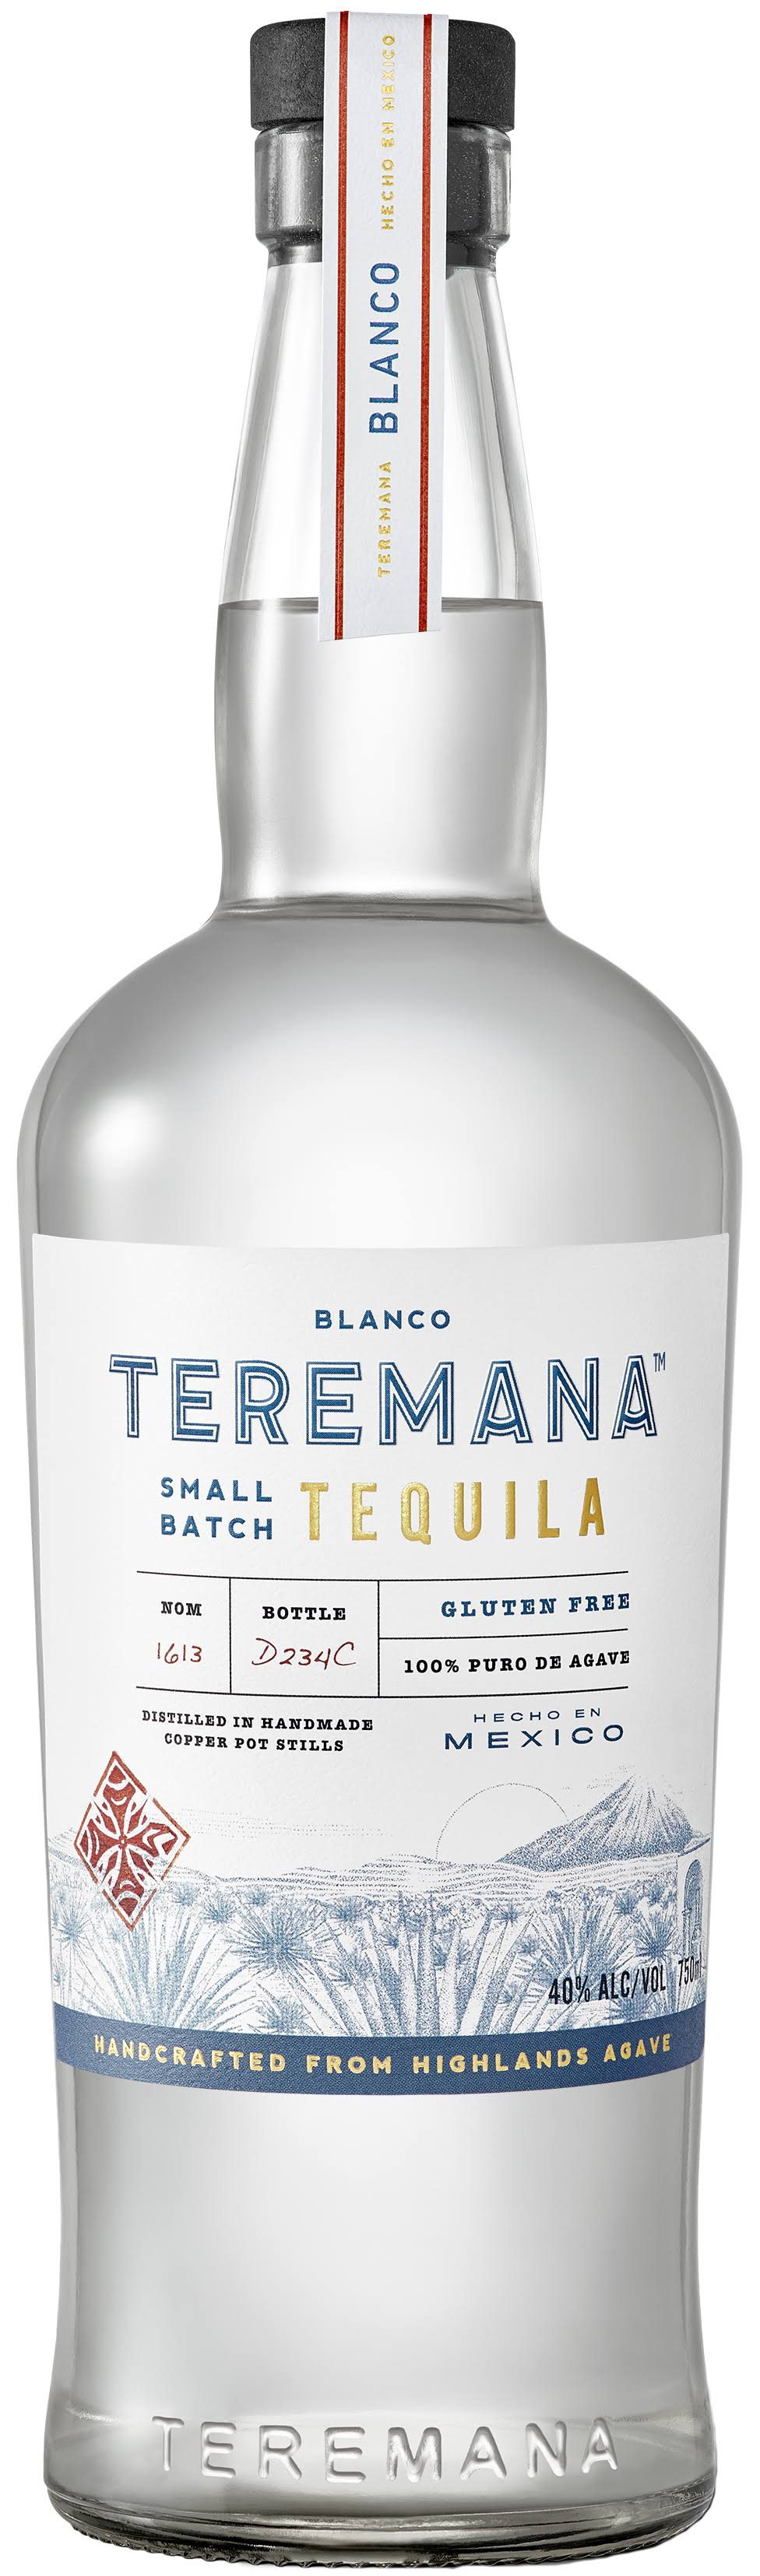 Teremana Blanco Tequila - 750 ml